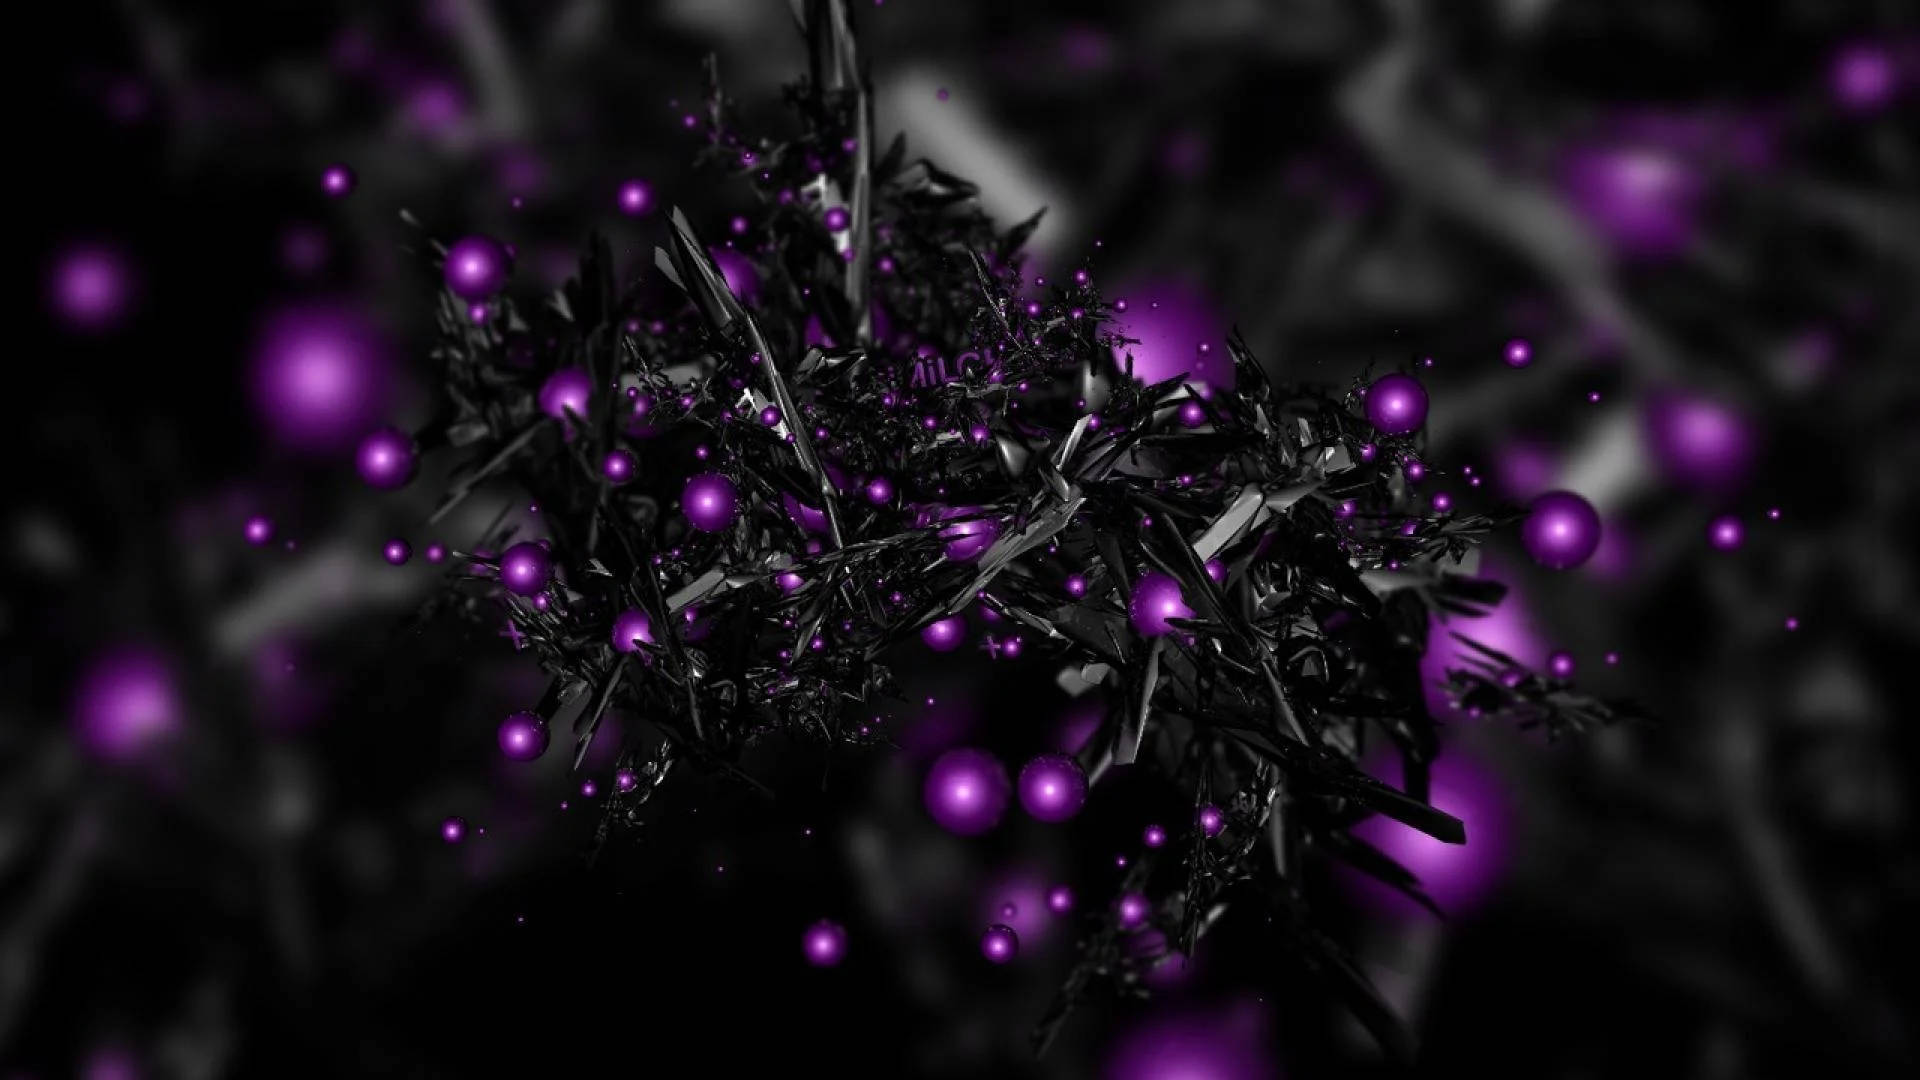 Purple Wallpapers: Free HD Download [500+ HQ]